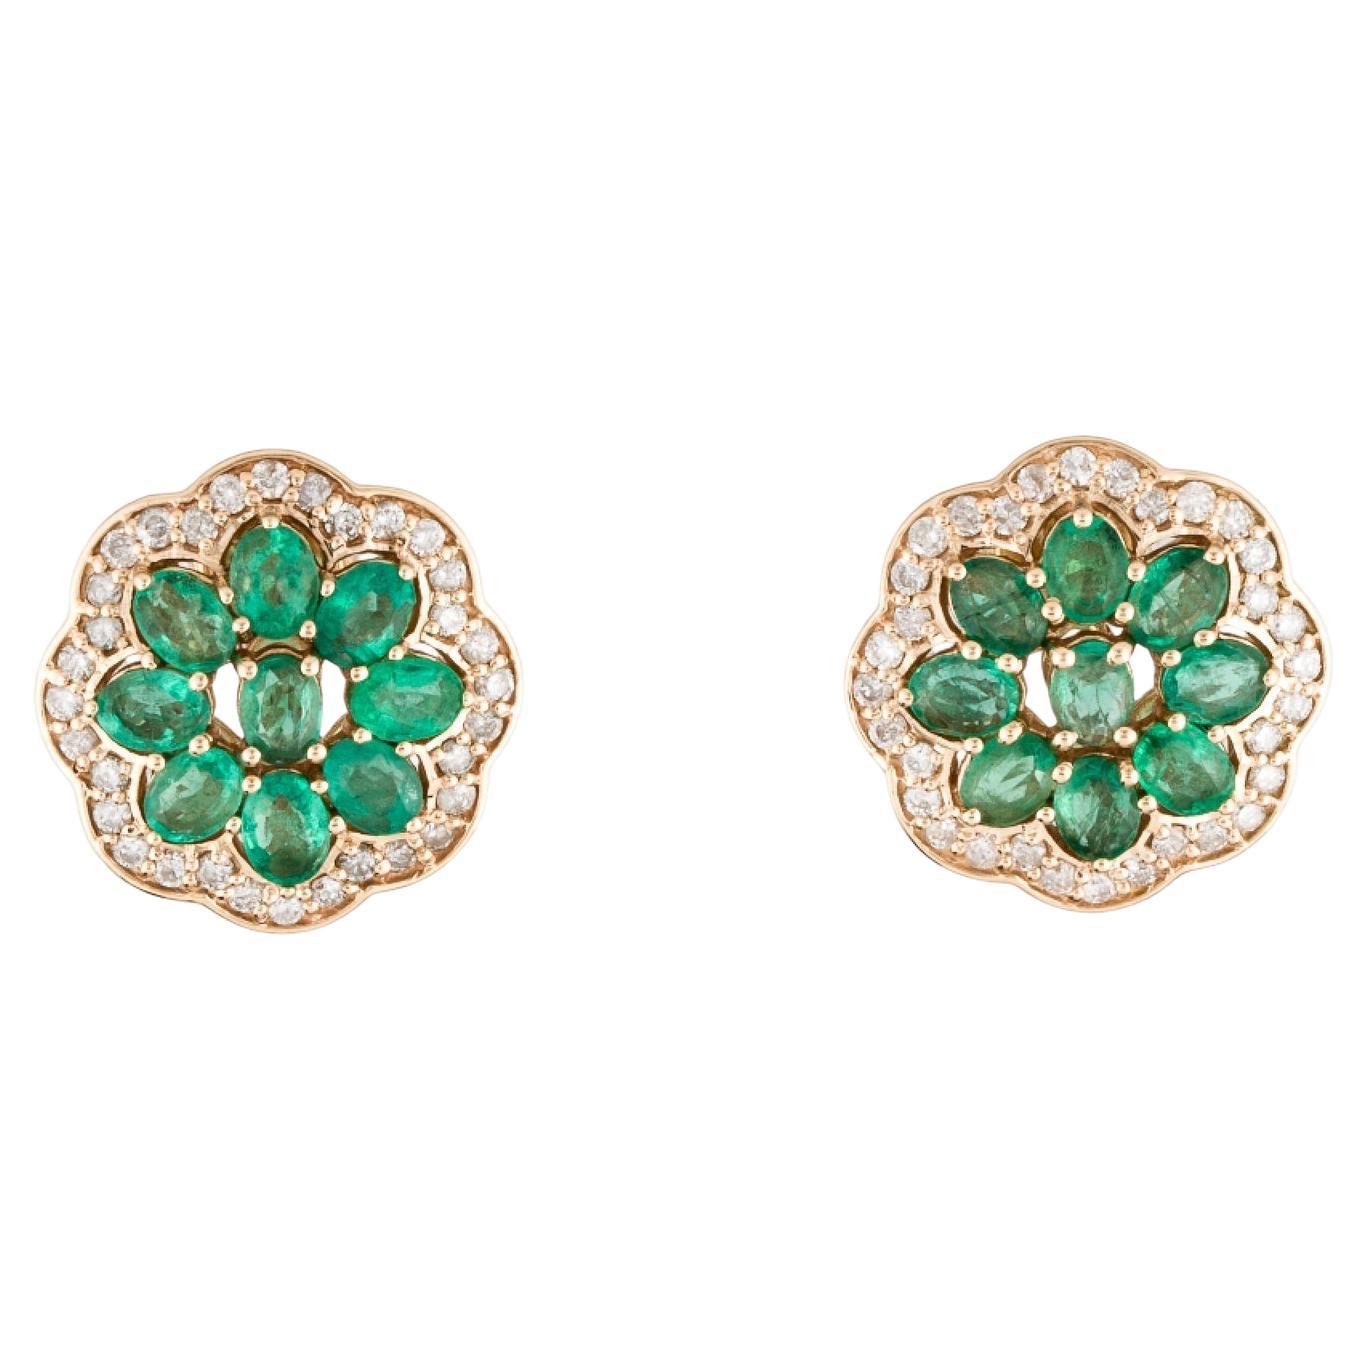 14K Emerald & Diamond Stud Earrings- Exquisite Gemstone Jewelry Timeless Glamour